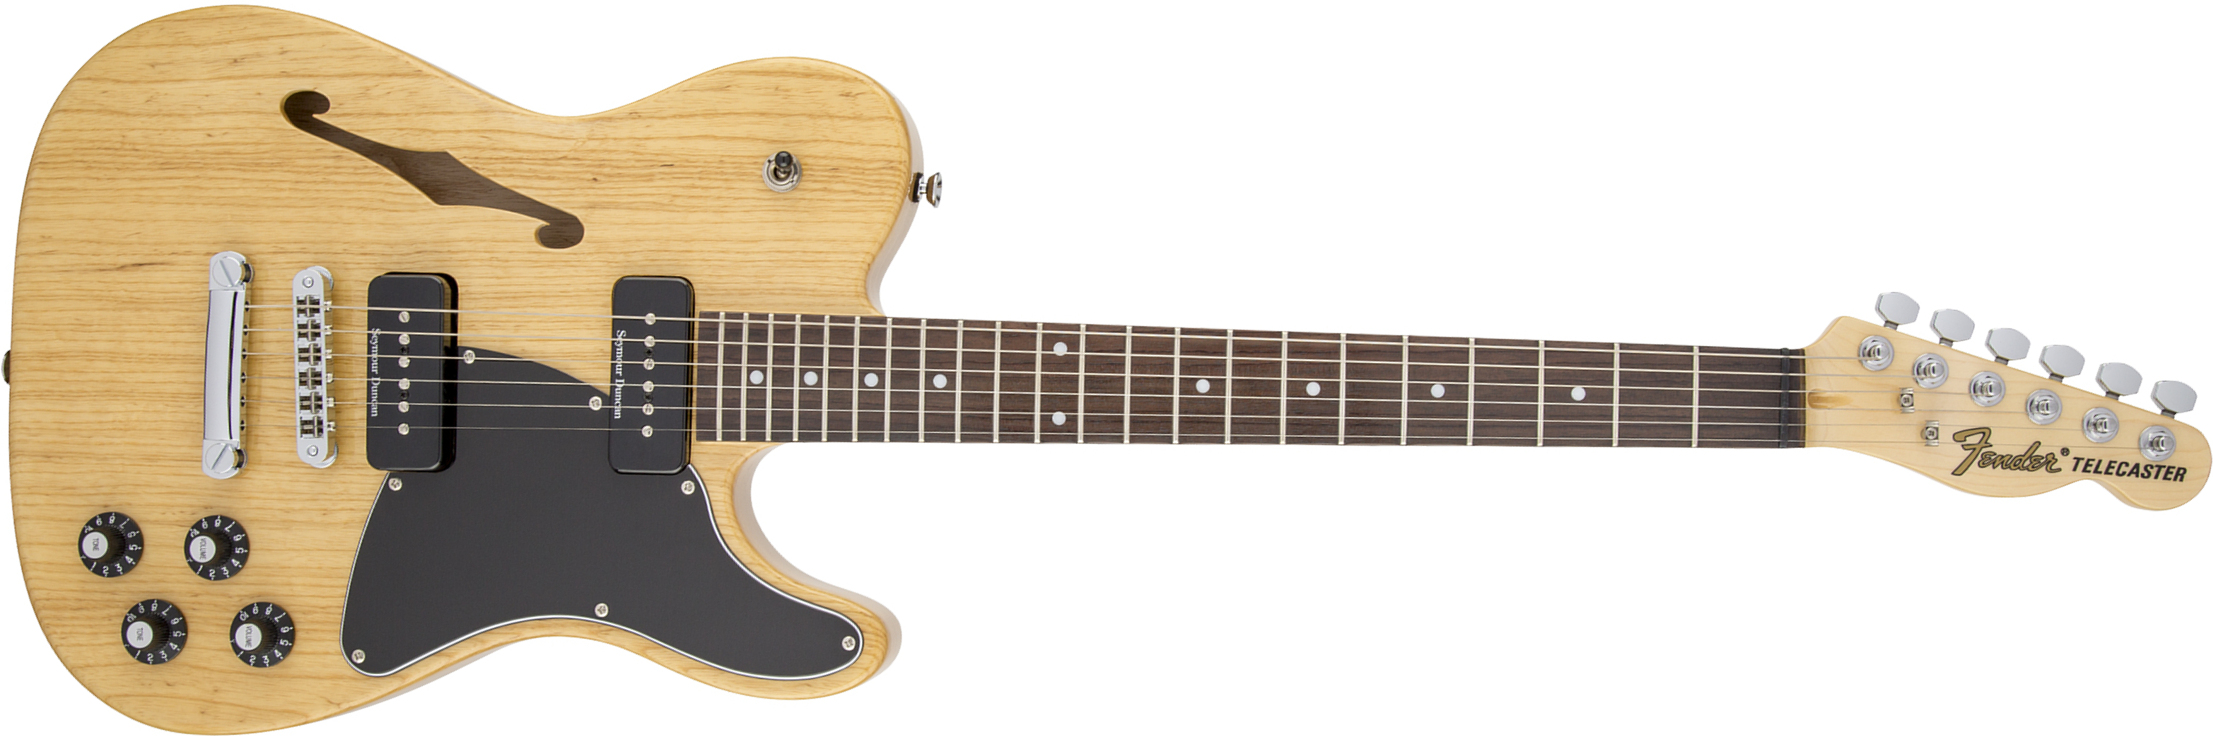 Fender Jim Adkins Tele Ja-90 Mex Signature 2p90 Lau - Natural - Televorm elektrische gitaar - Main picture